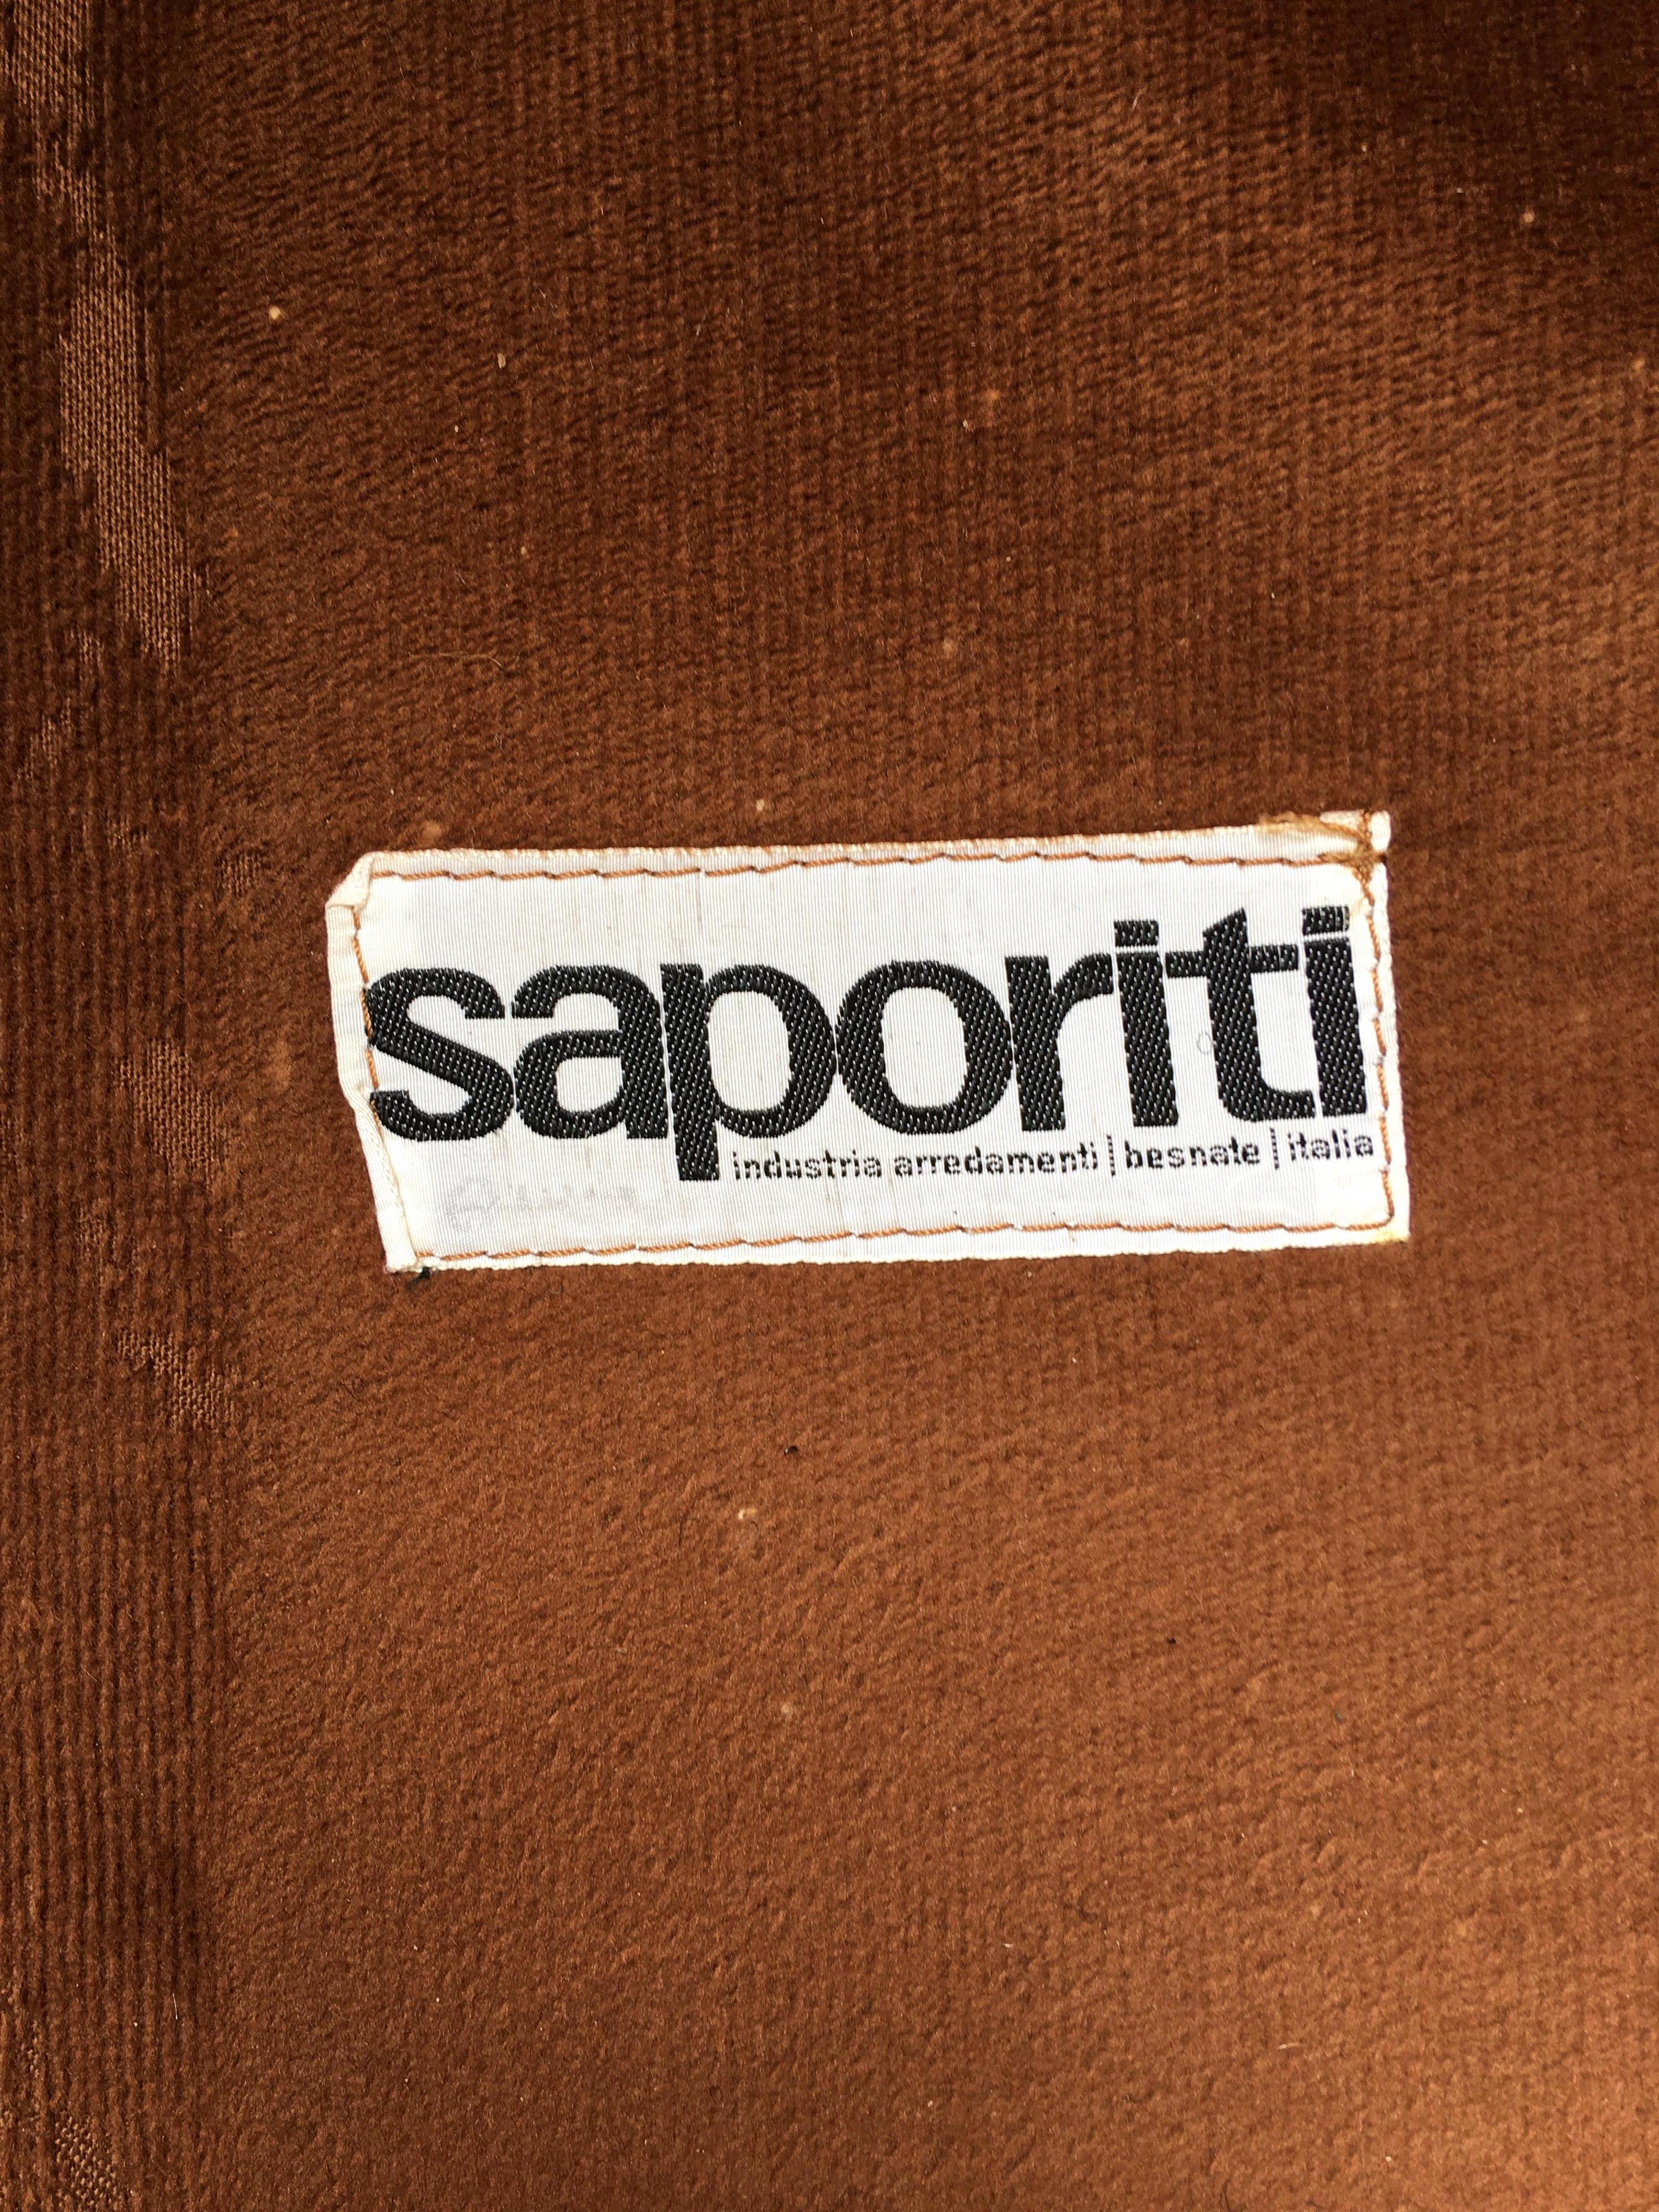 Saporiti Leather and Chrome Lounge Chairs 8